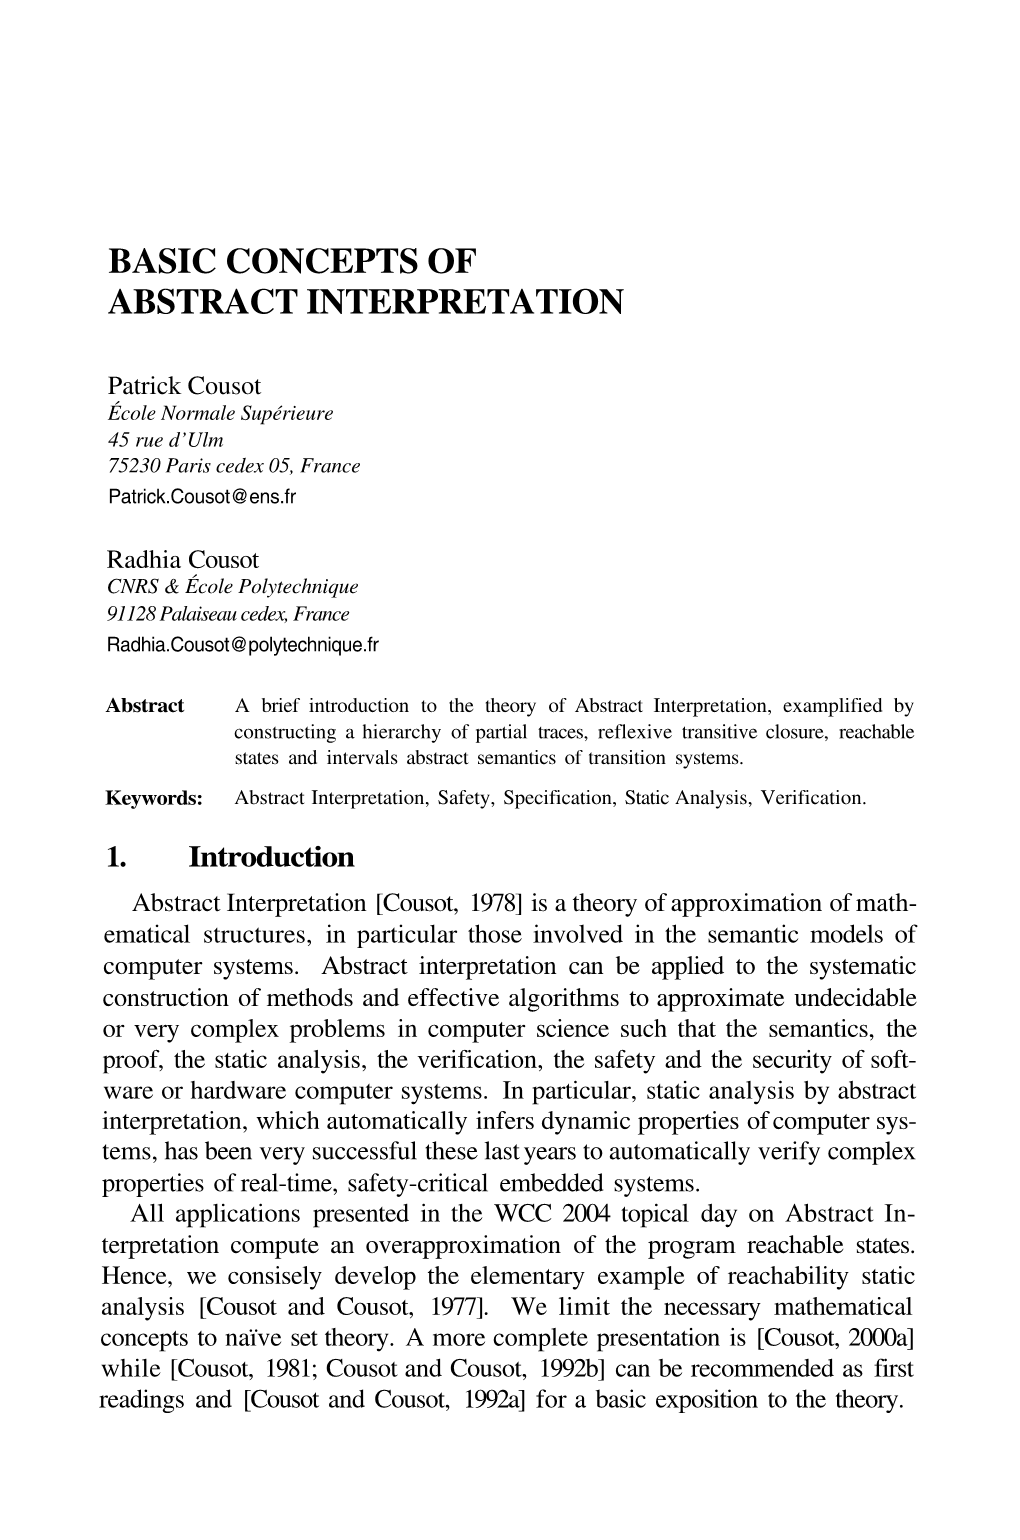 Basic Concepts of Abstract Interpretation